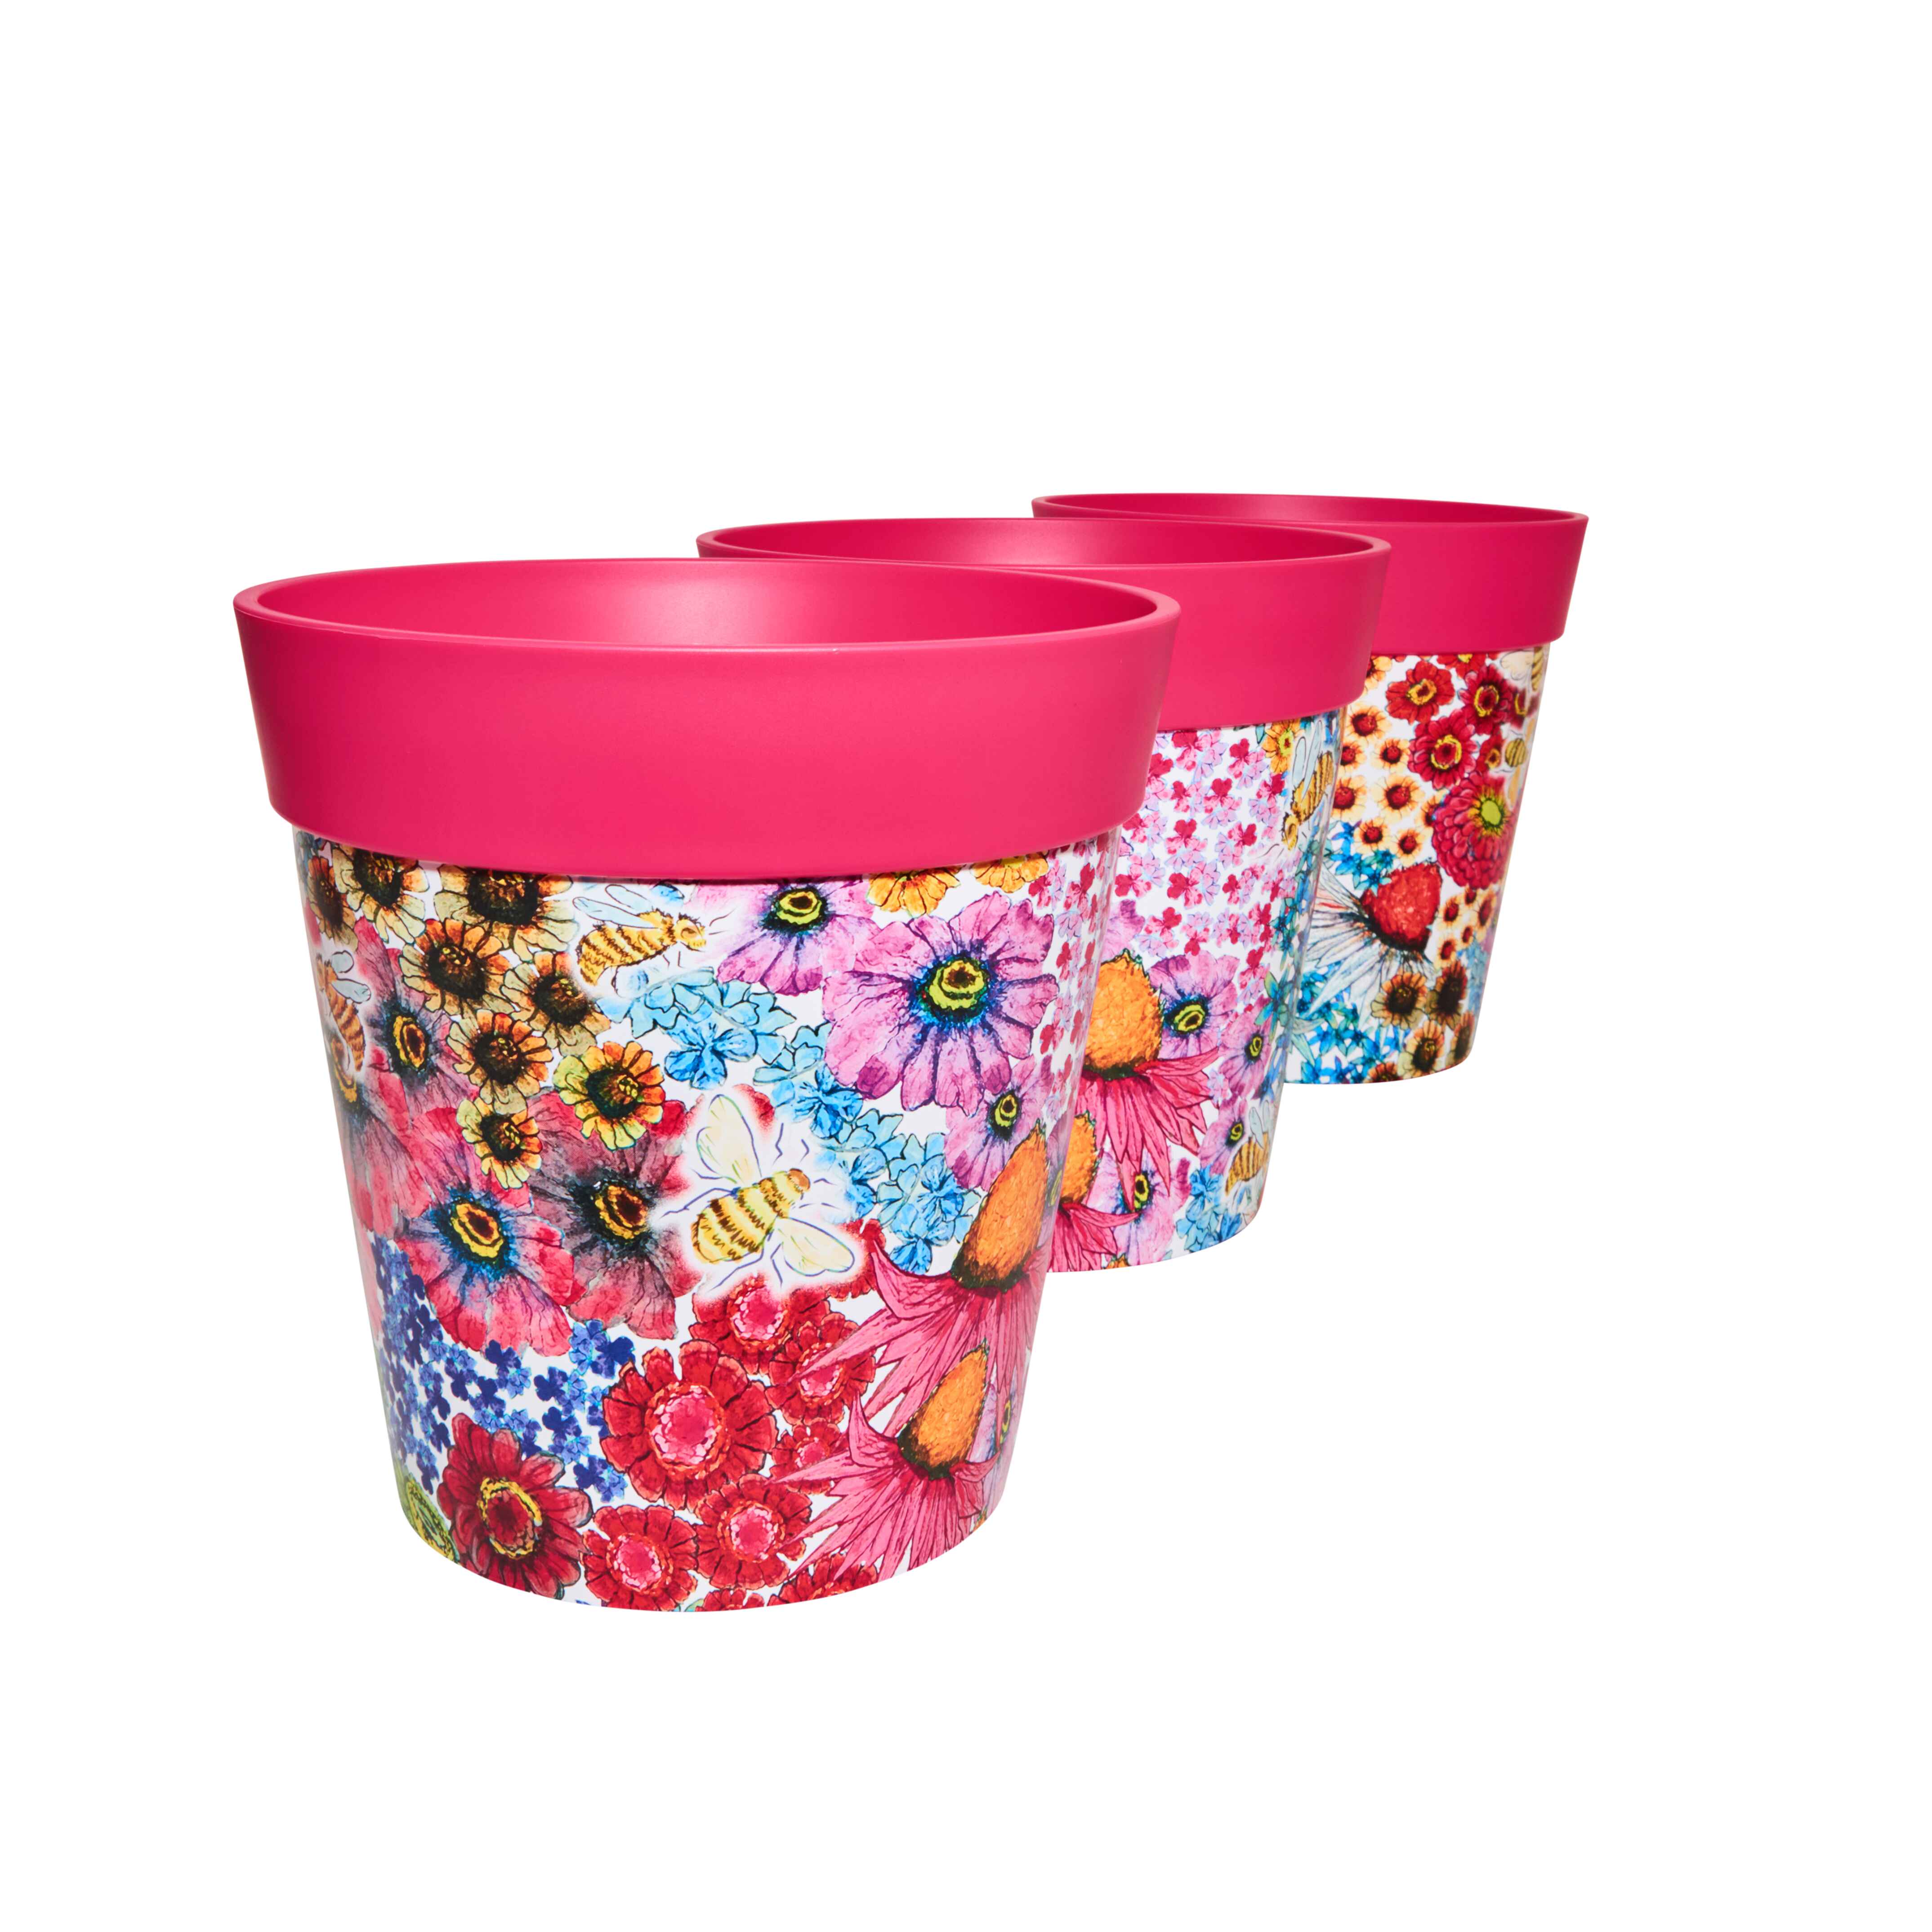 Picture of 3 Medium 22cm Plastic Pink Flowers and Bees Pattern Indoor/Outdoor Flowerpots